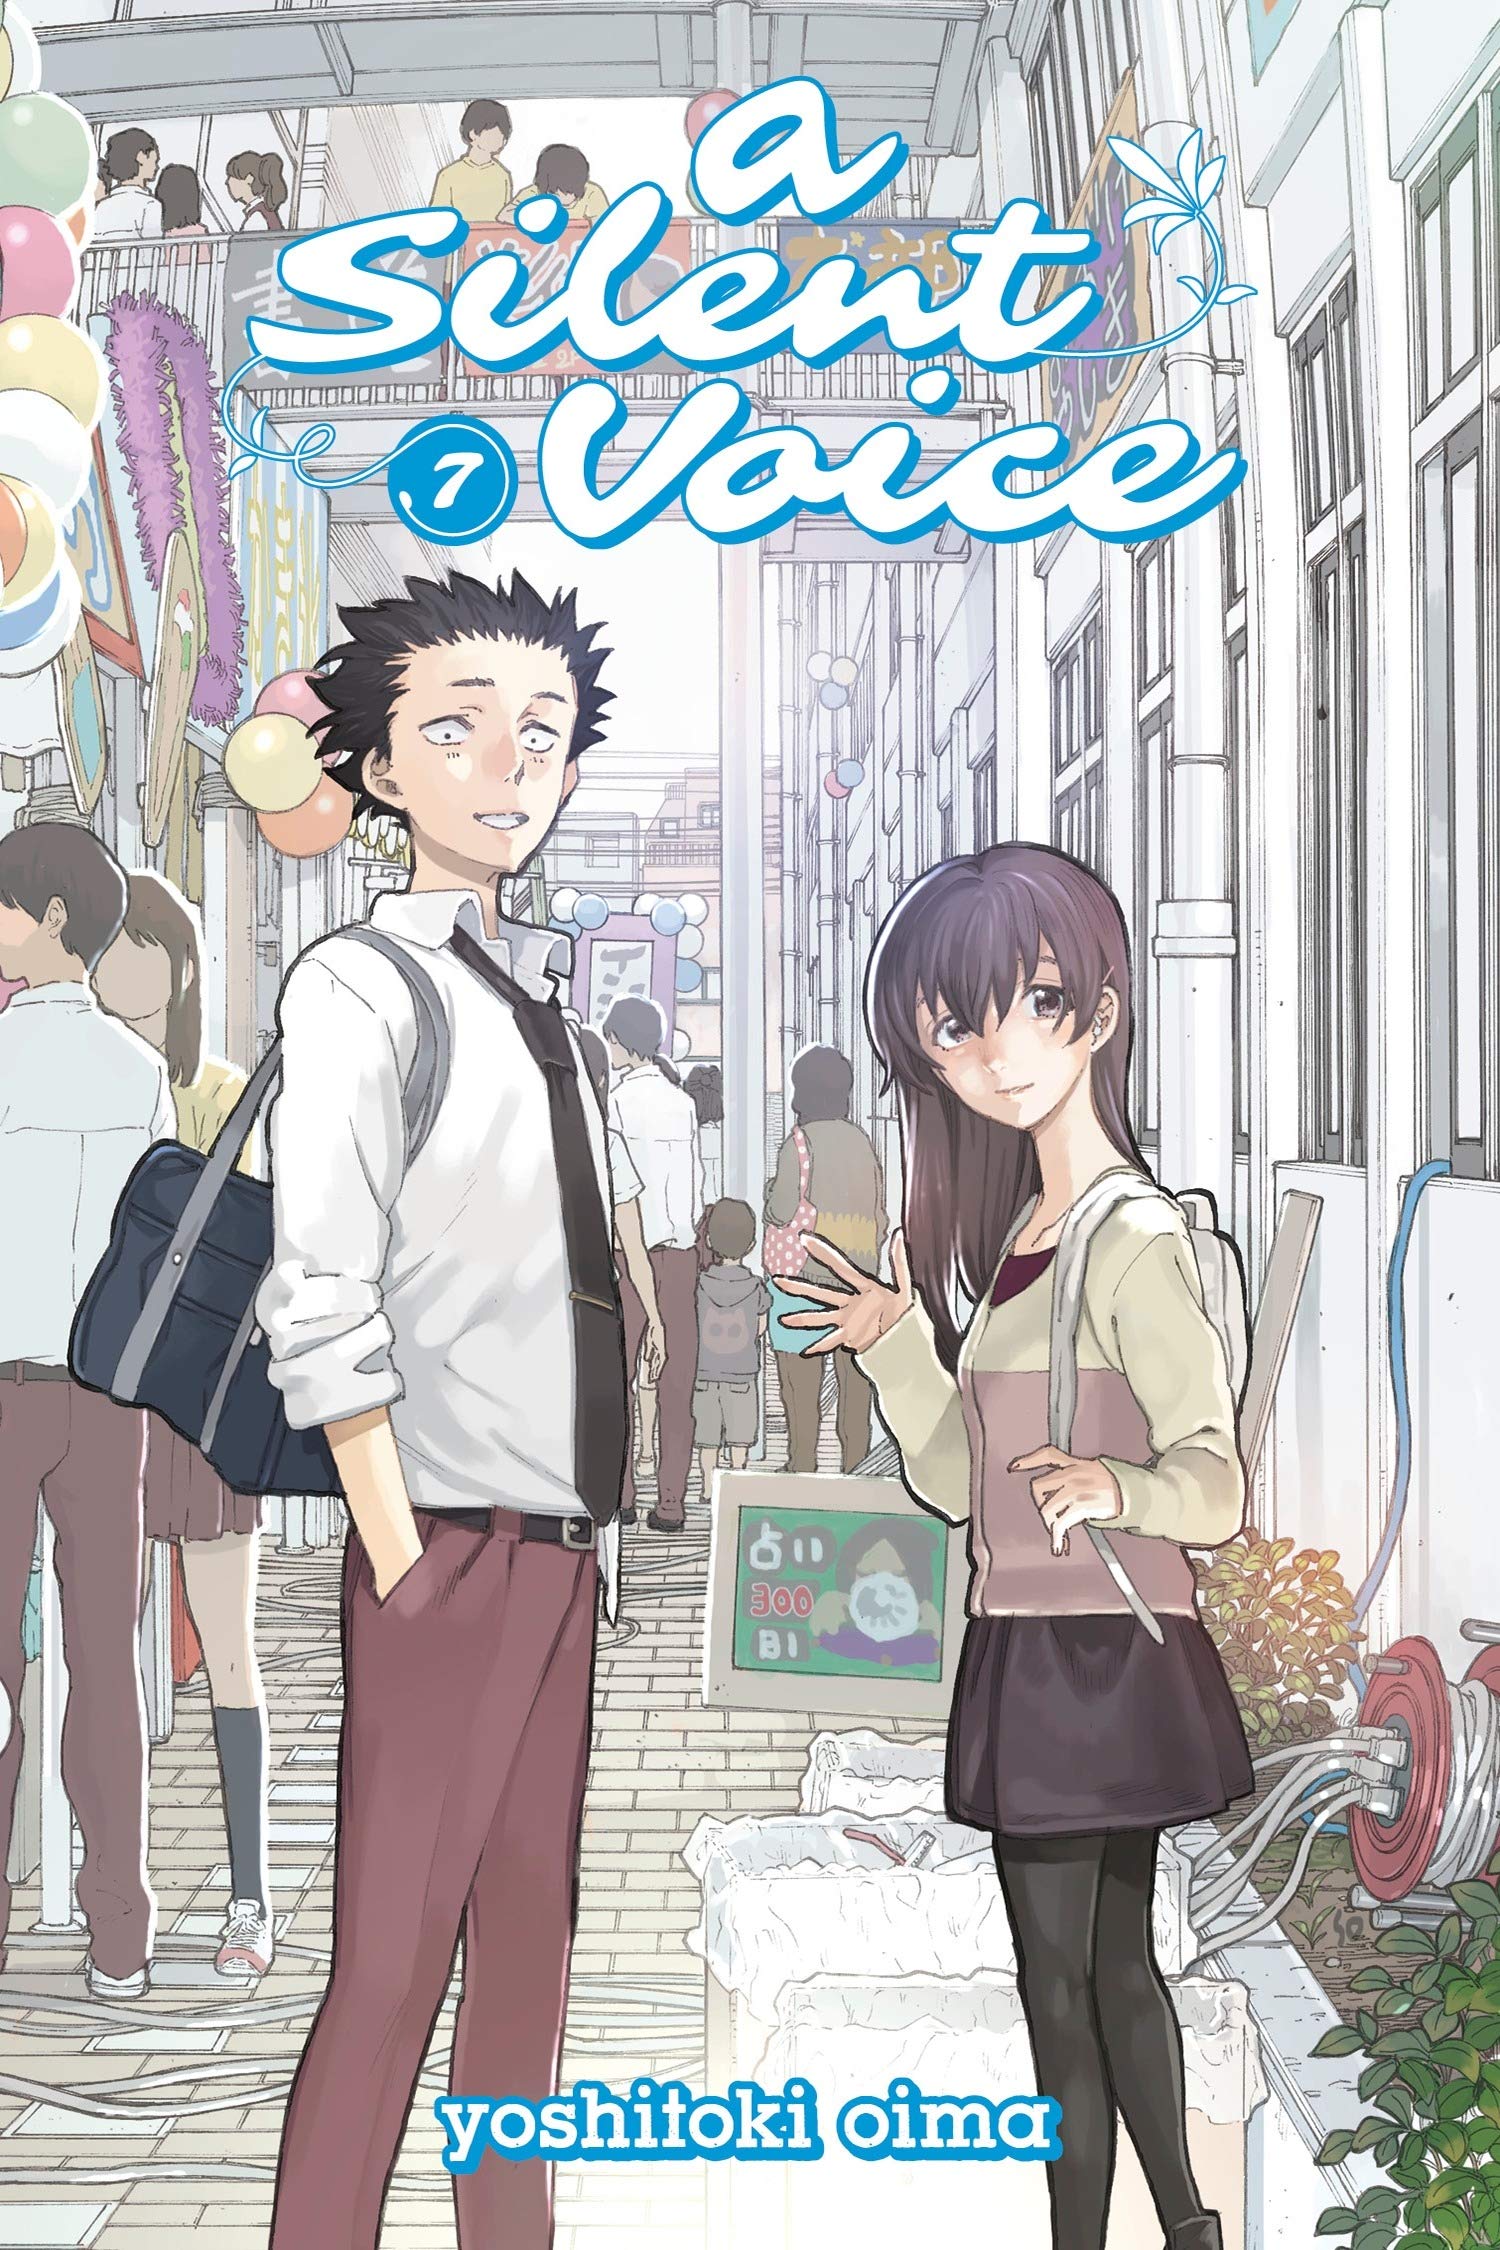 A Silent Voice 7 Final volume!